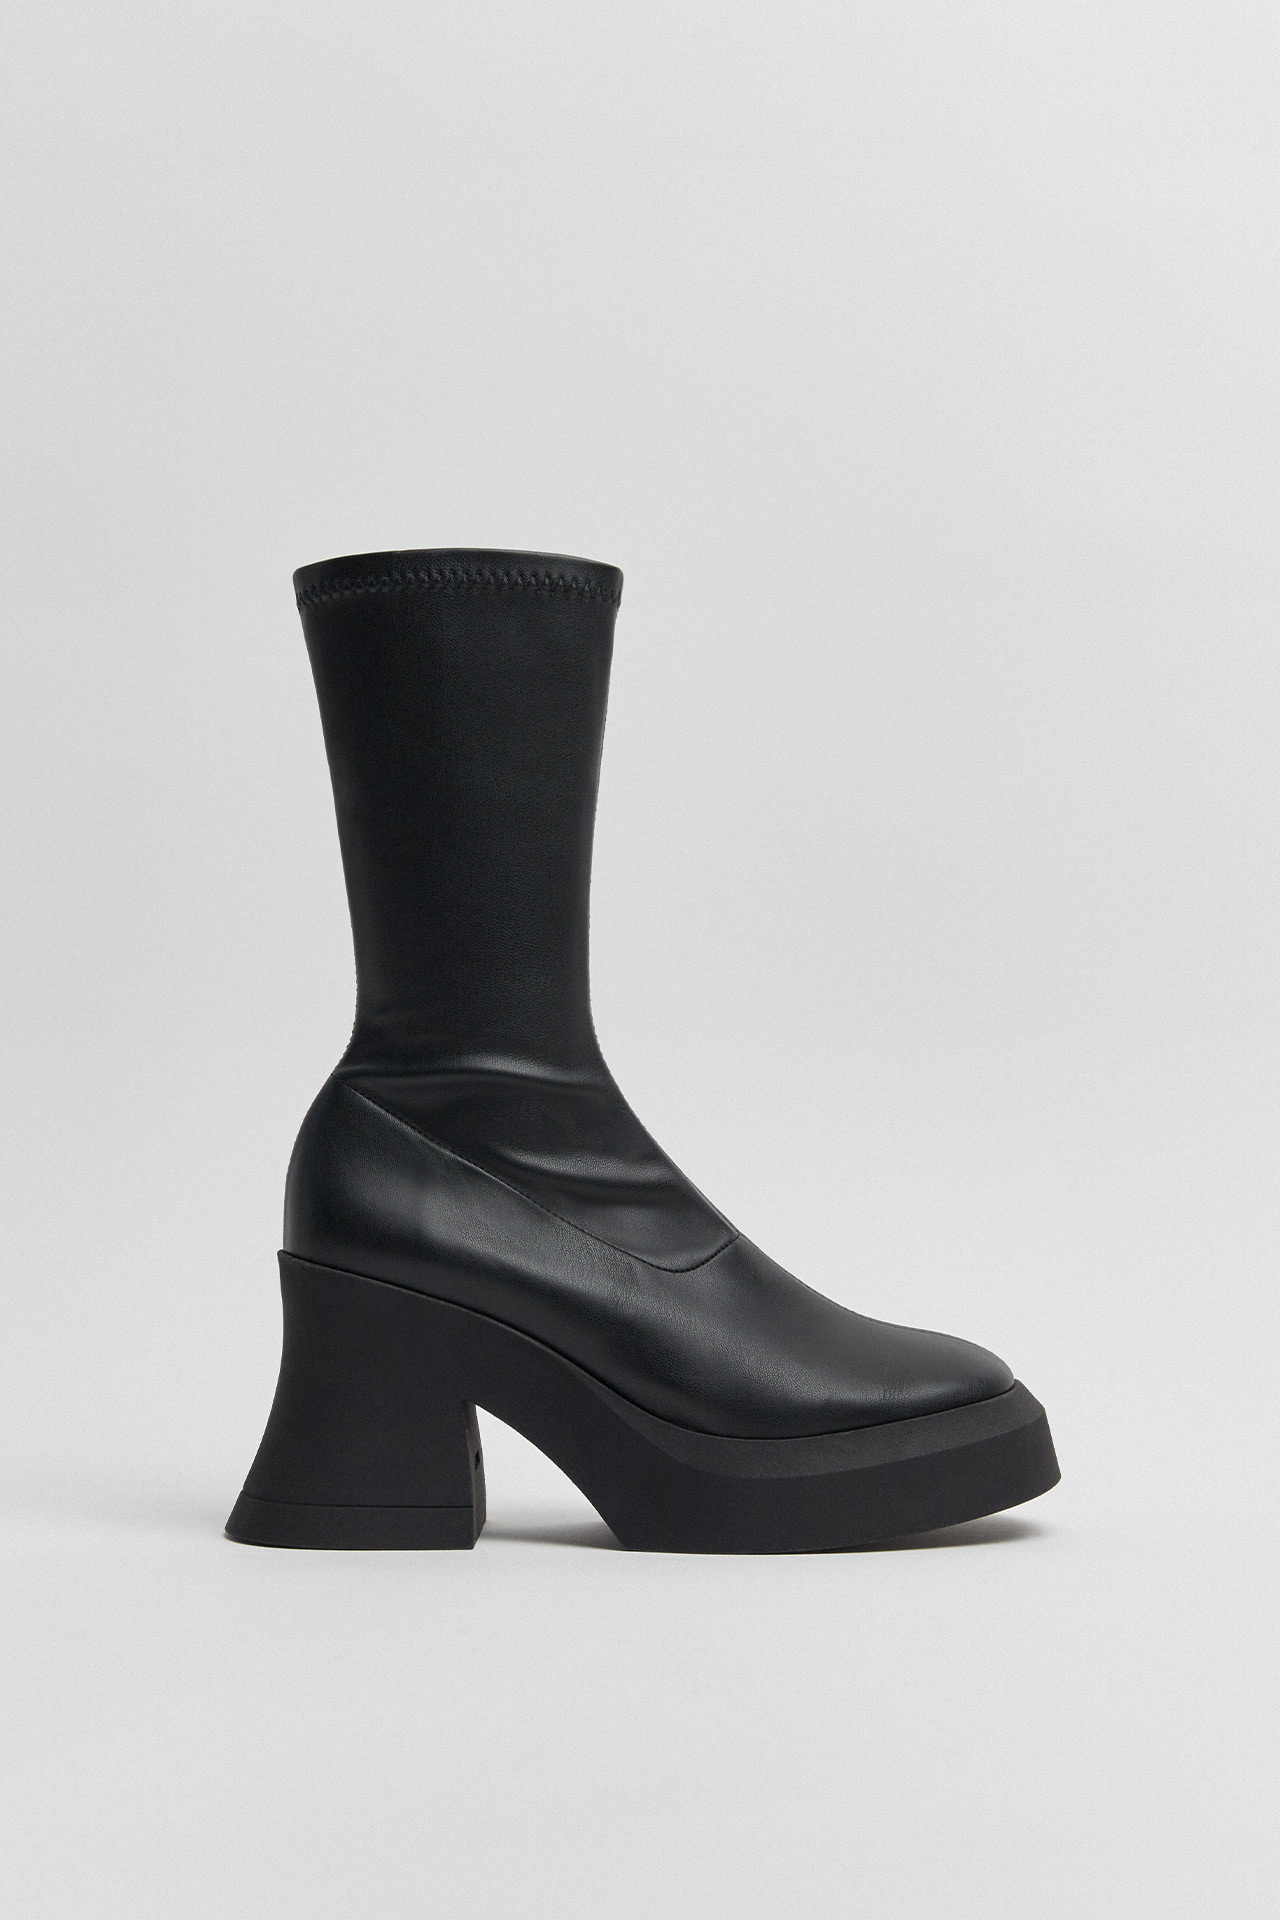 Aura Black Boots